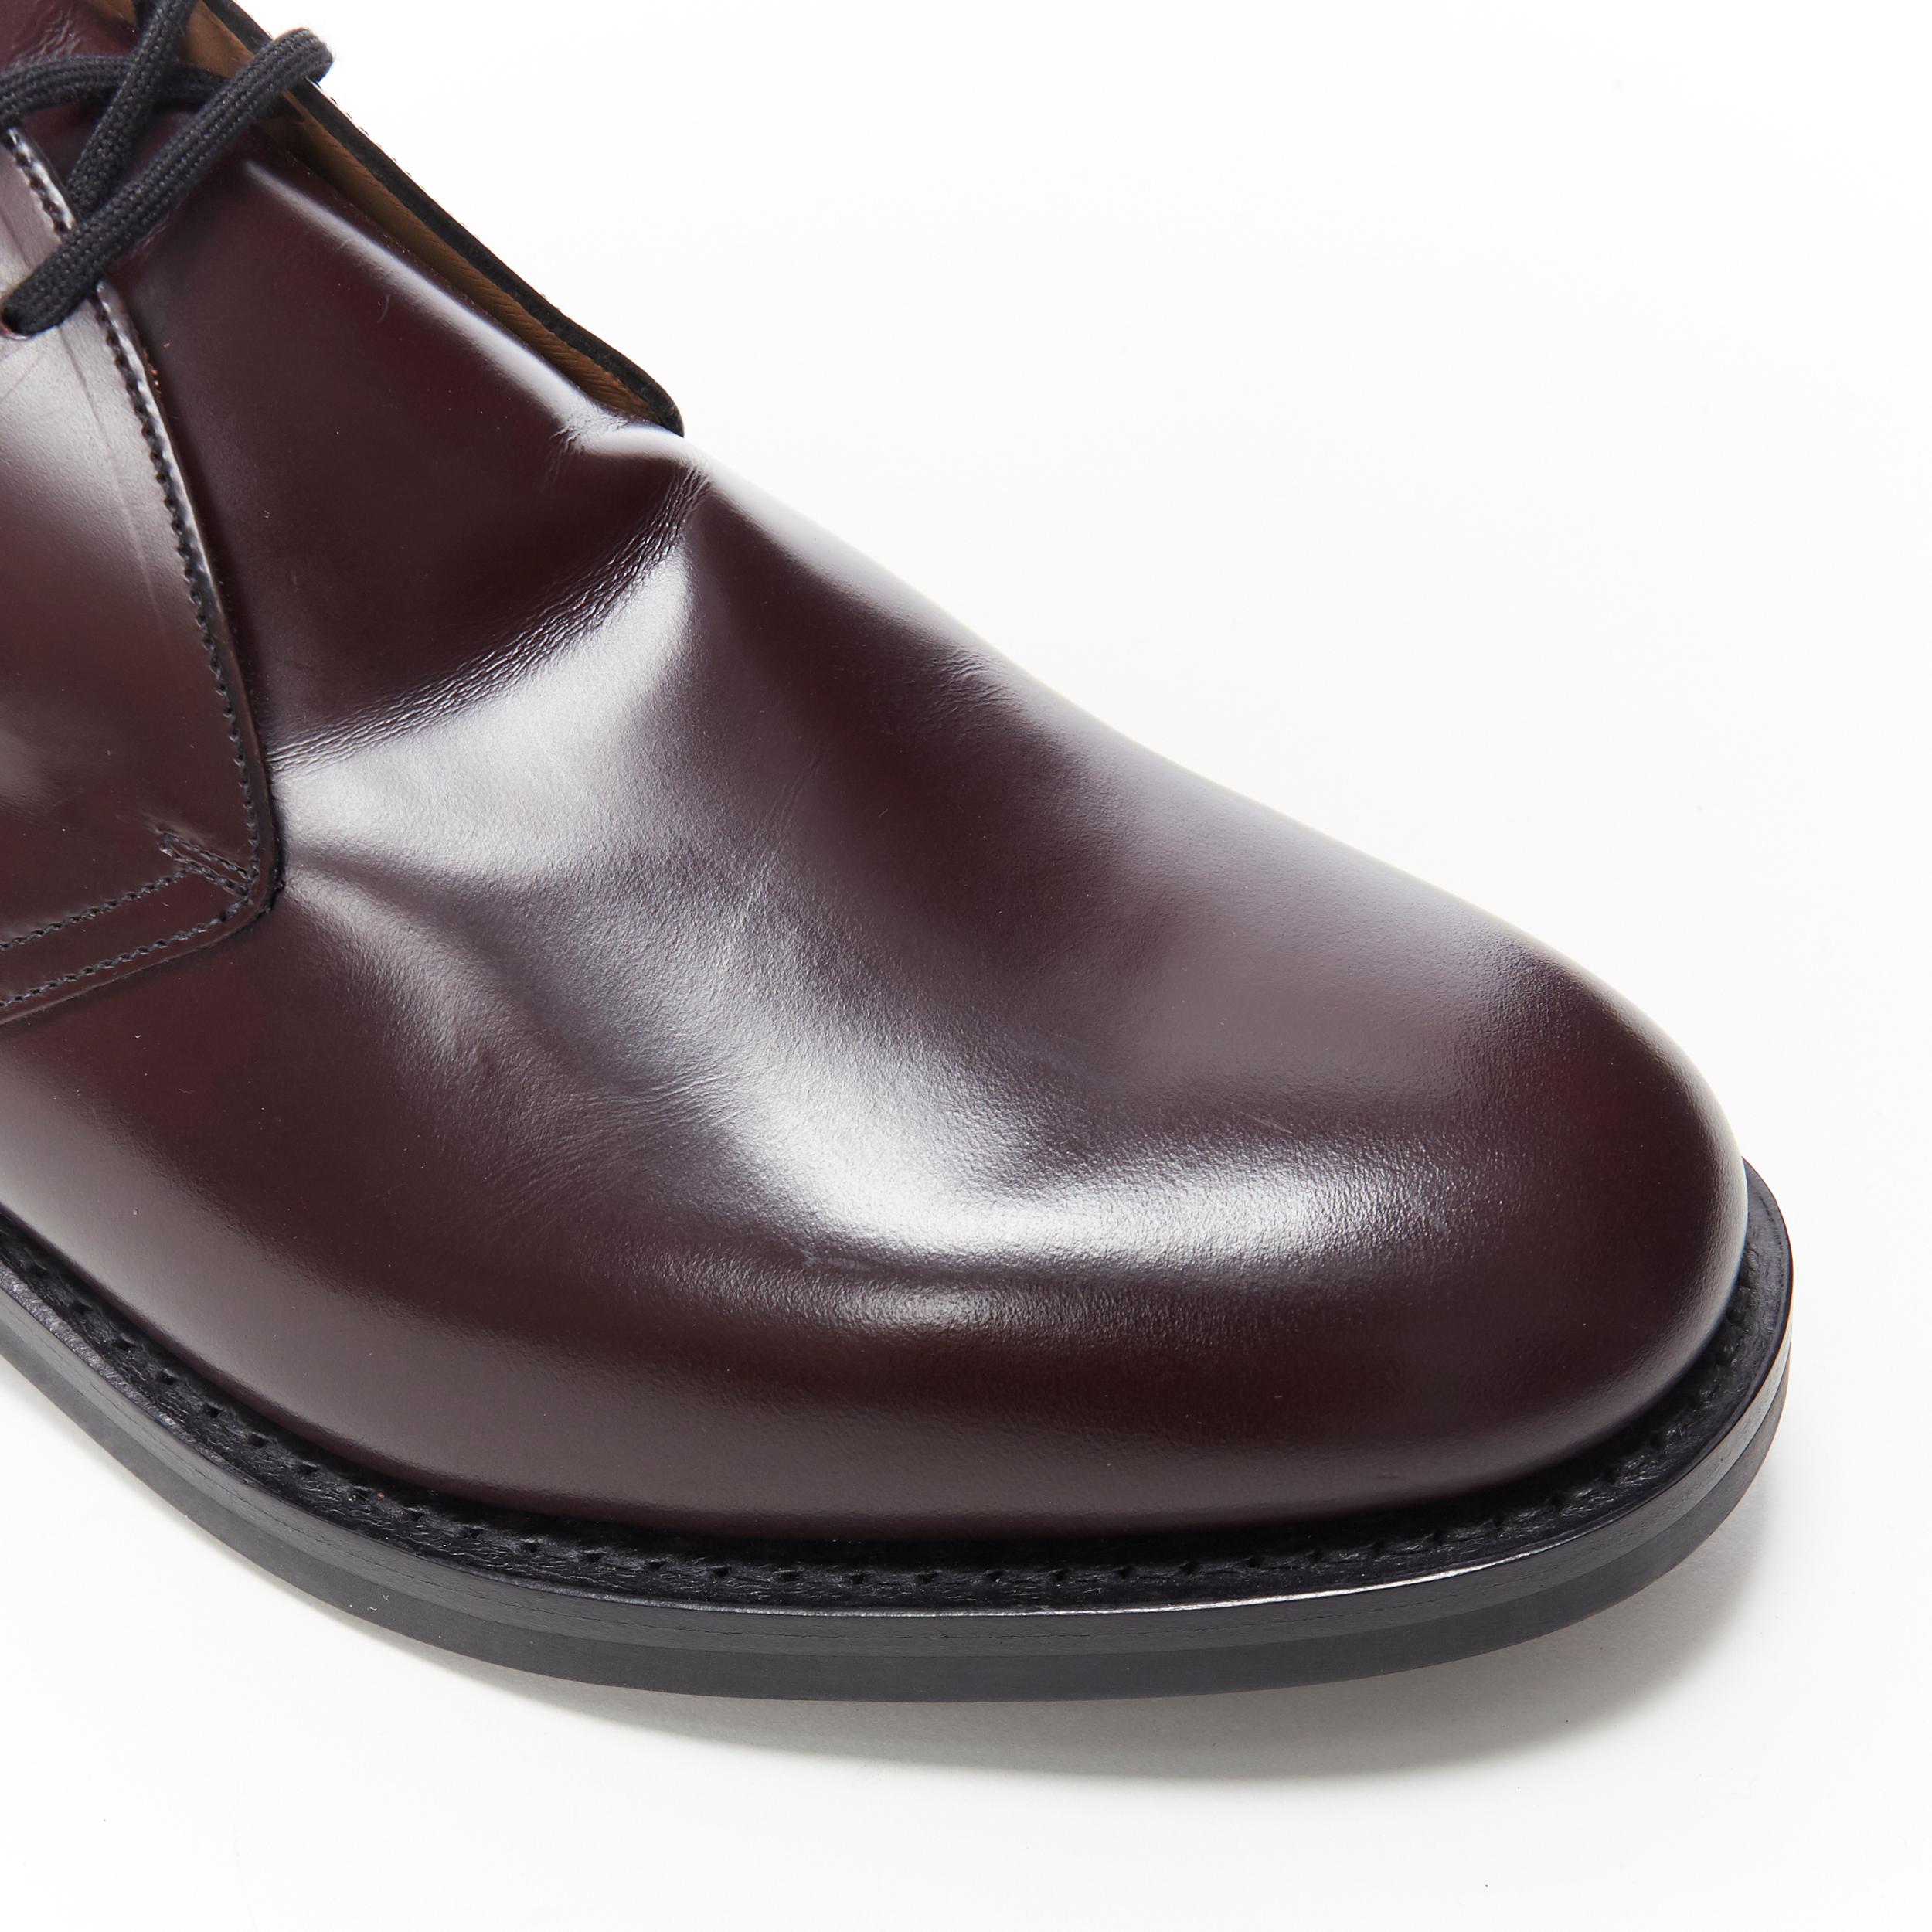 new CHURCHS Ryder 3 Burgundy Bright Calf polished leather chukka boots UK11 US12 2